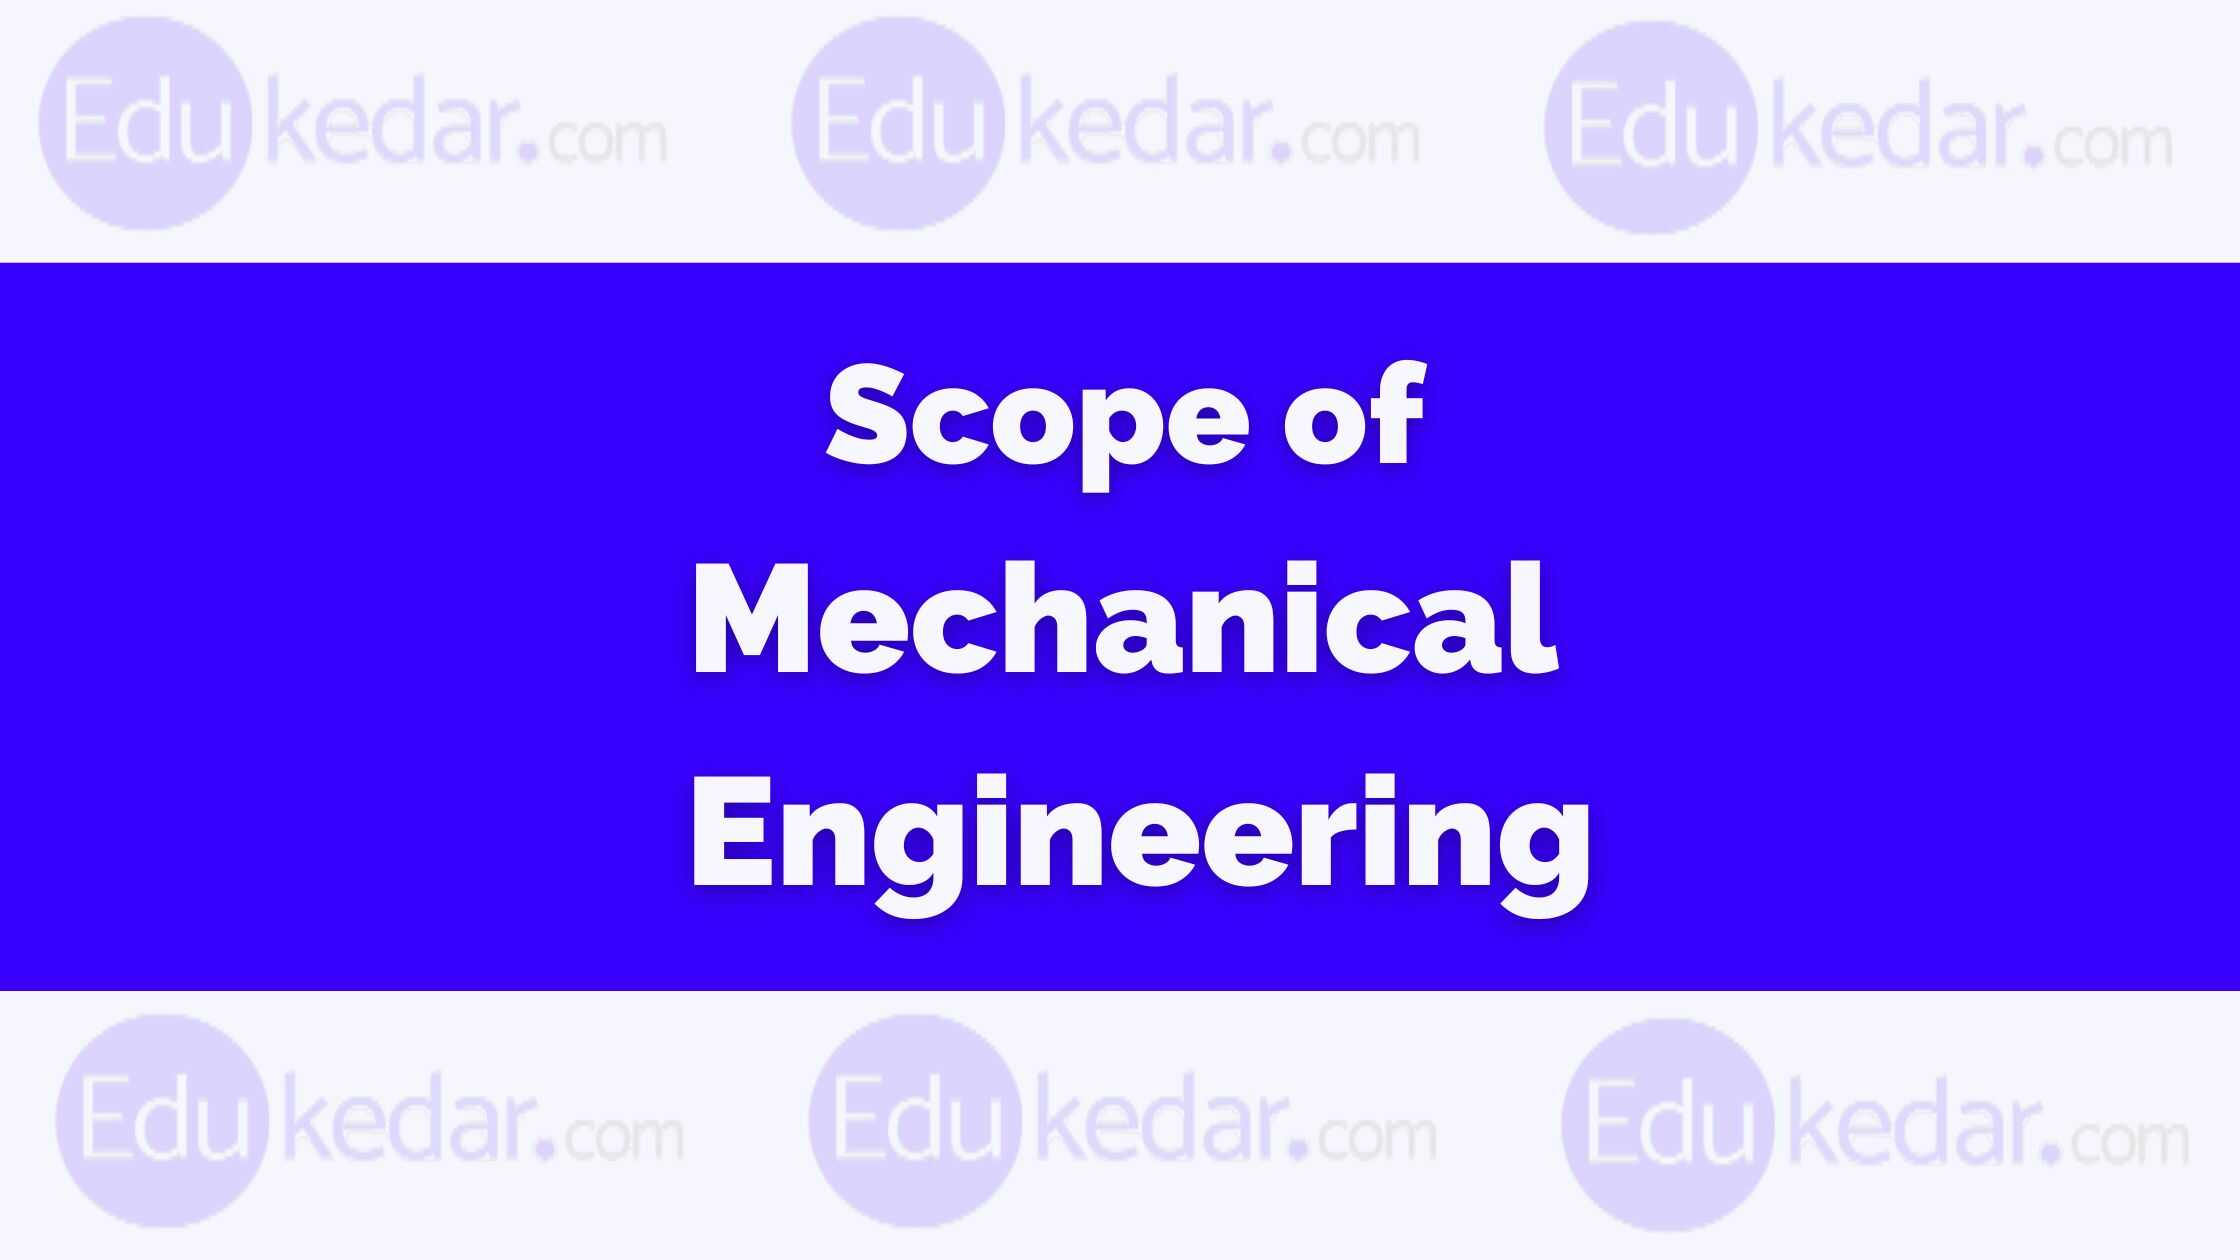 Scope of Mechanical Engineering Design, Mechanics, Automotive